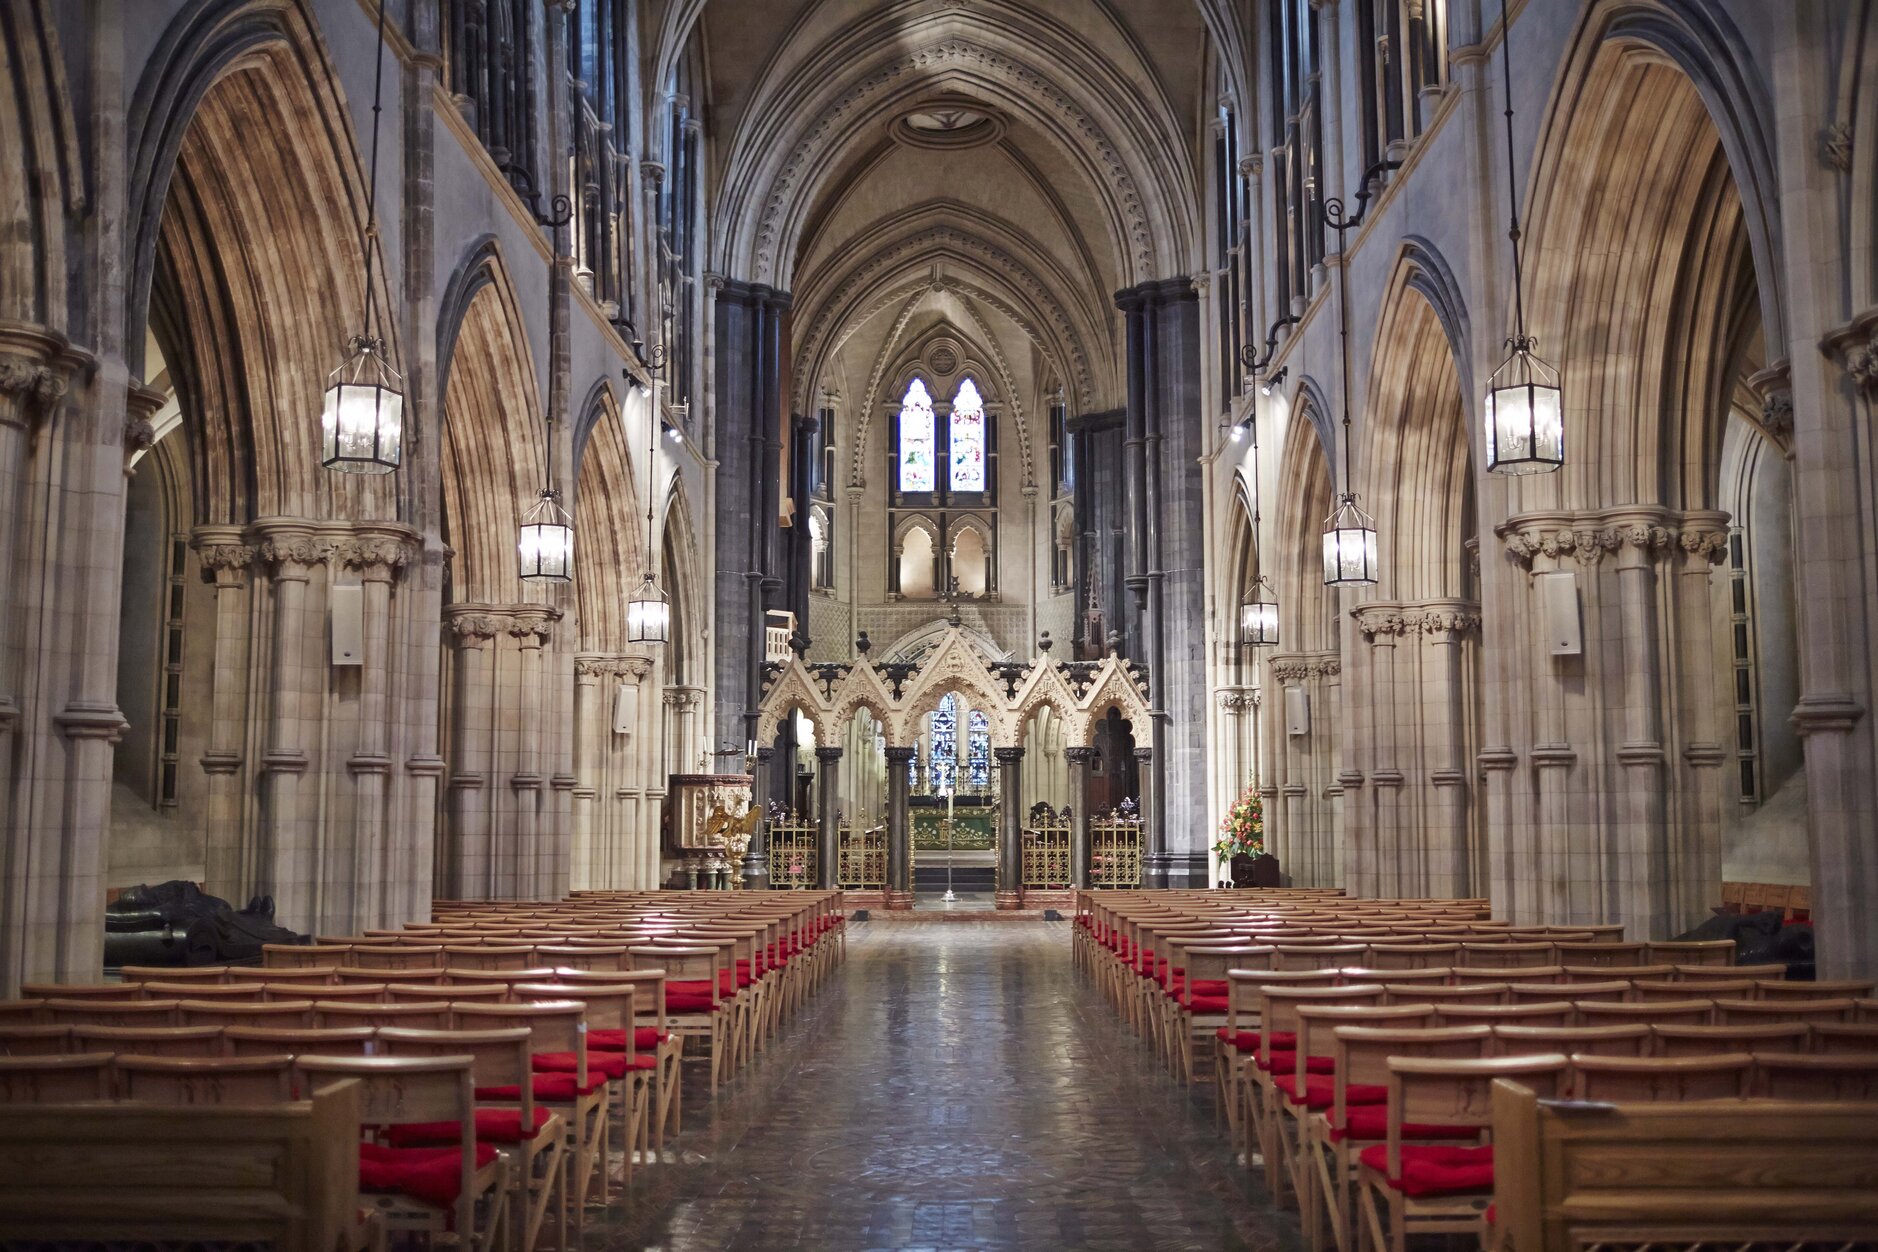 Exploring the Treasures of Christ Church - Book and new video invite visitors to explore Dublin landmark.